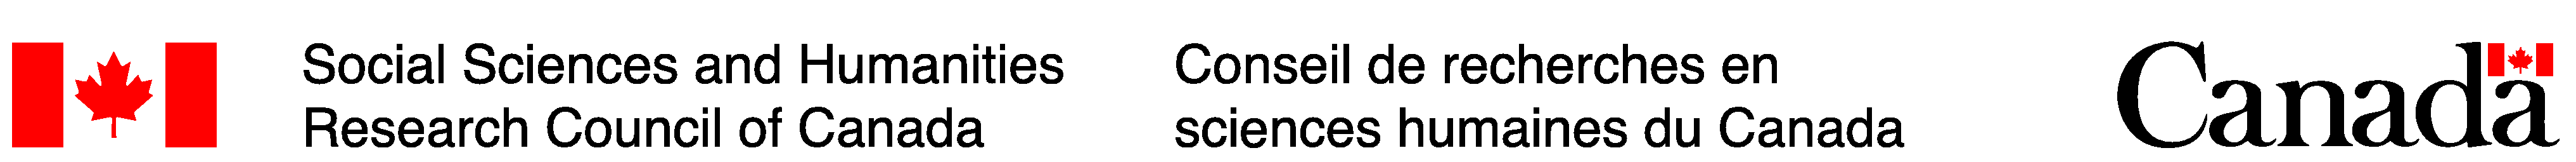 sshrc-logo-1-1.png